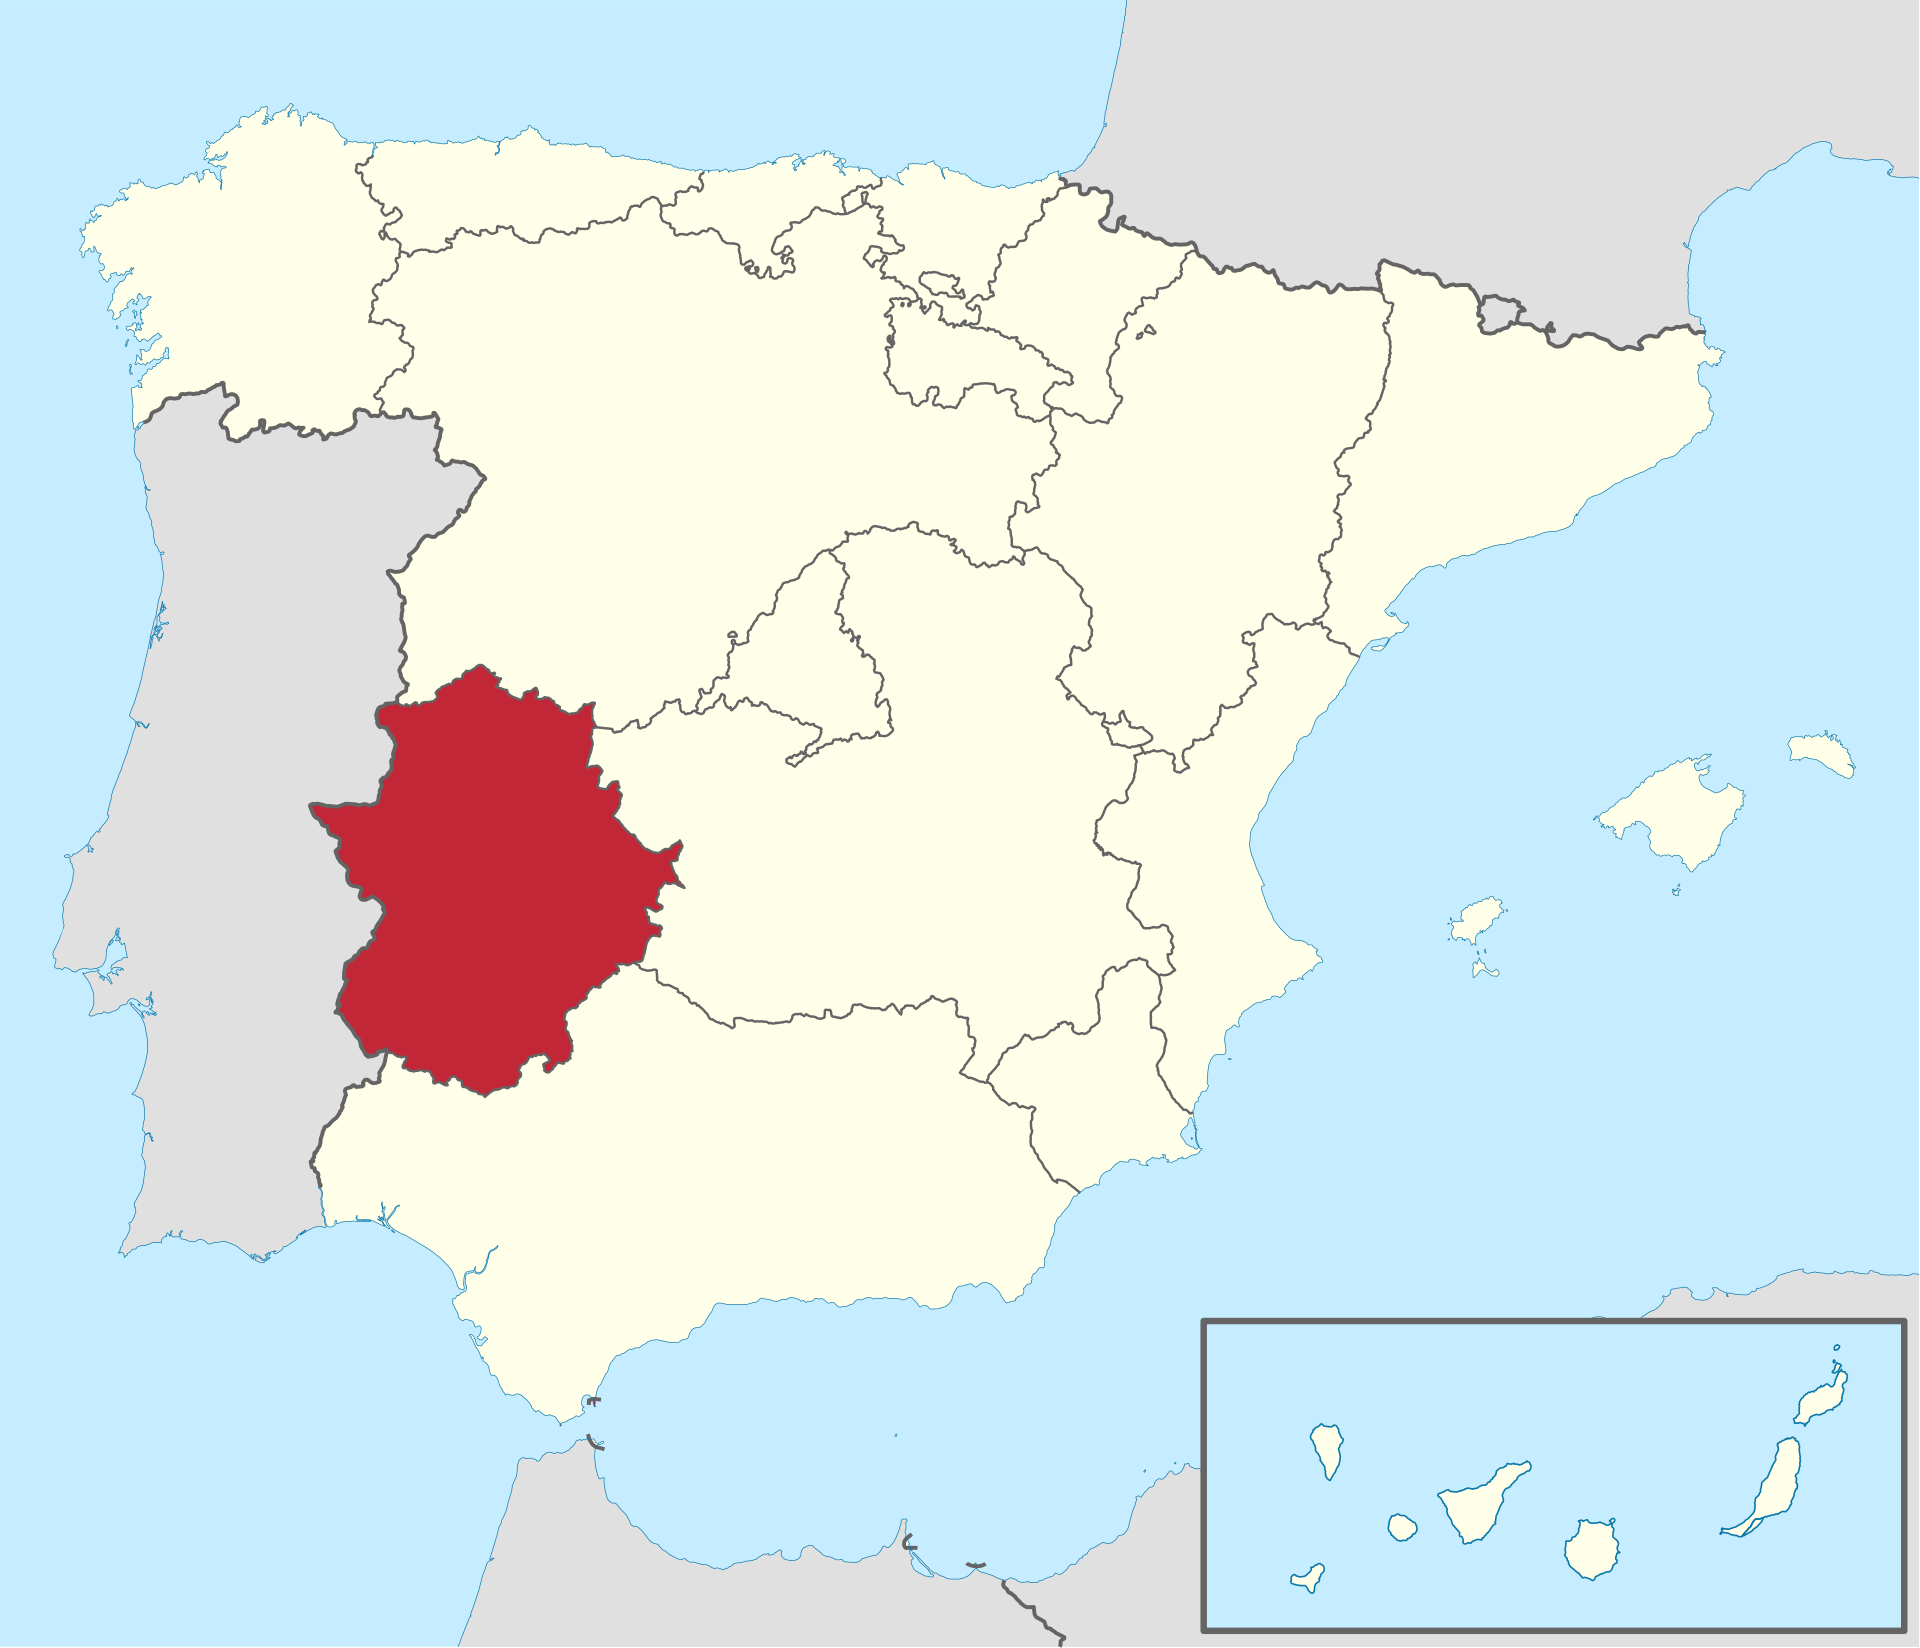 Hotel Milenial Urbex location or around the region Extremadura (Badajoz), Spain